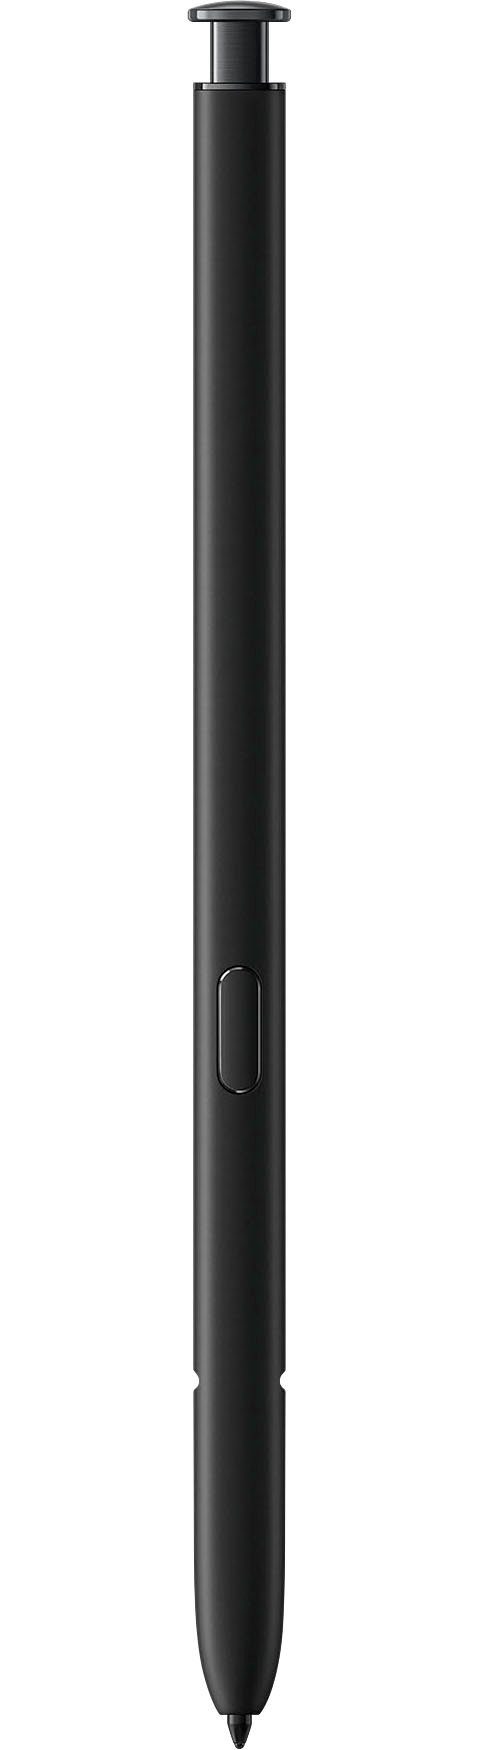 Samsung Galaxy S23 Ultra Smartphone Speicherplatz, Zoll, 200 (17,31 Black Kamera) cm/6,8 512 MP GB